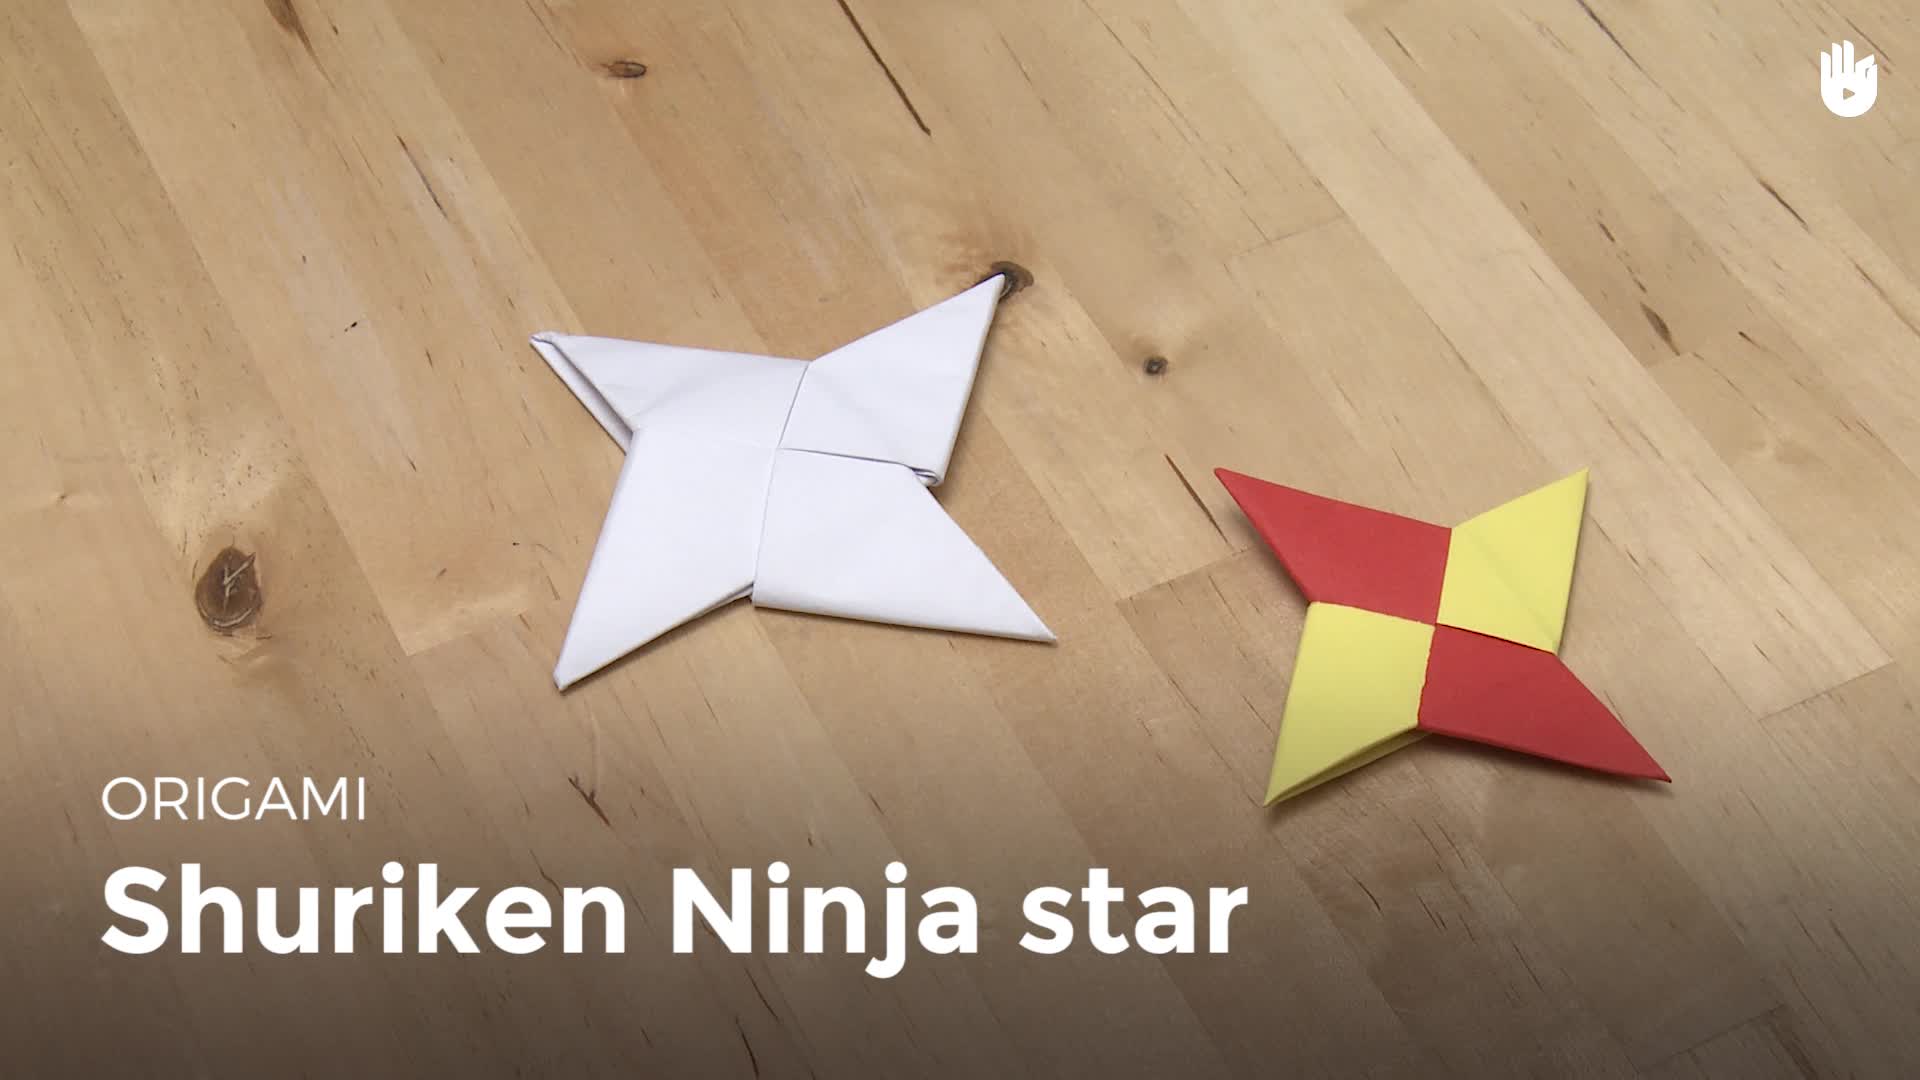 Origami shuriken ninja star How to Make Origami